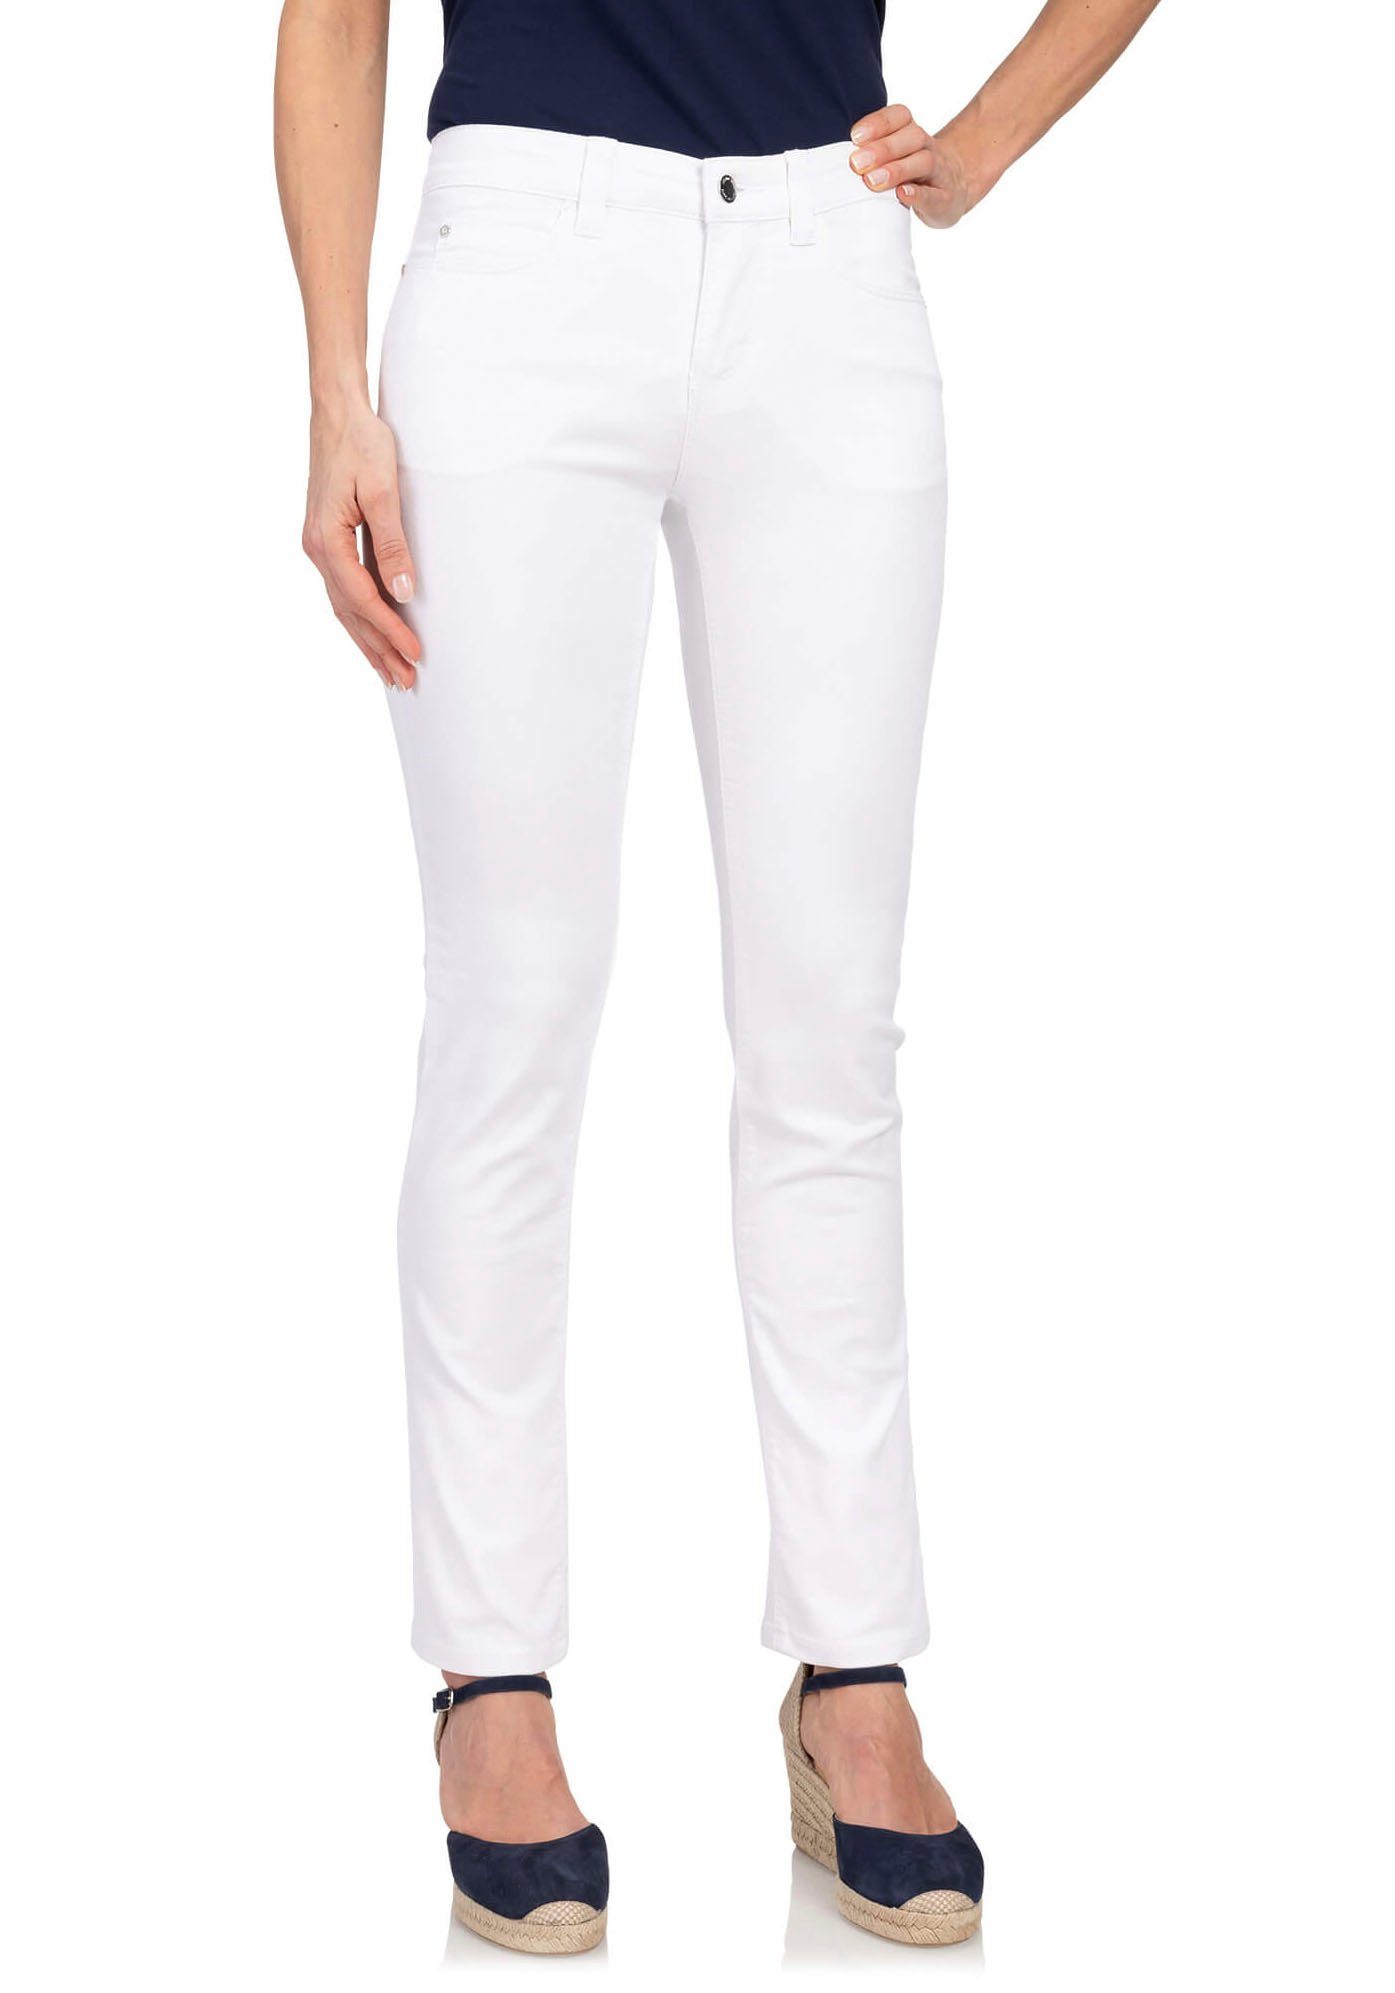 Klassischer denim gerader Classic-Slim Schnitt wonderjeans white Slim-fit-Jeans